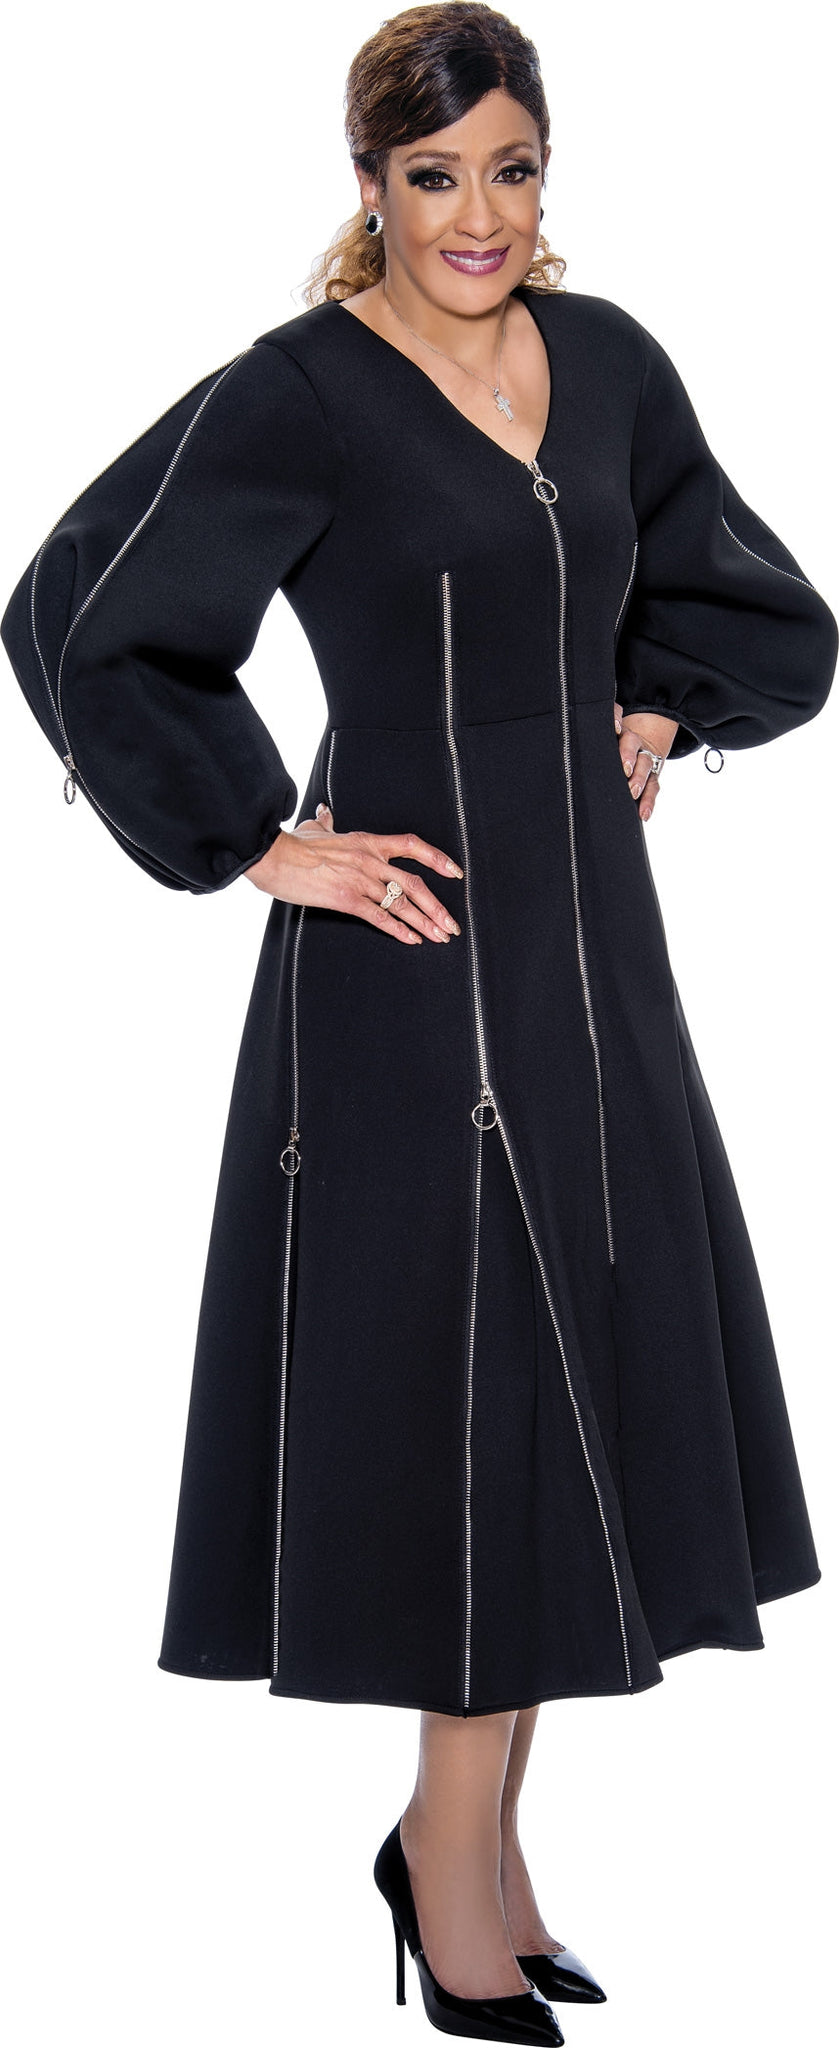 Dorinda Clark Cole Dress 4621C-Black - Church Suits For Less